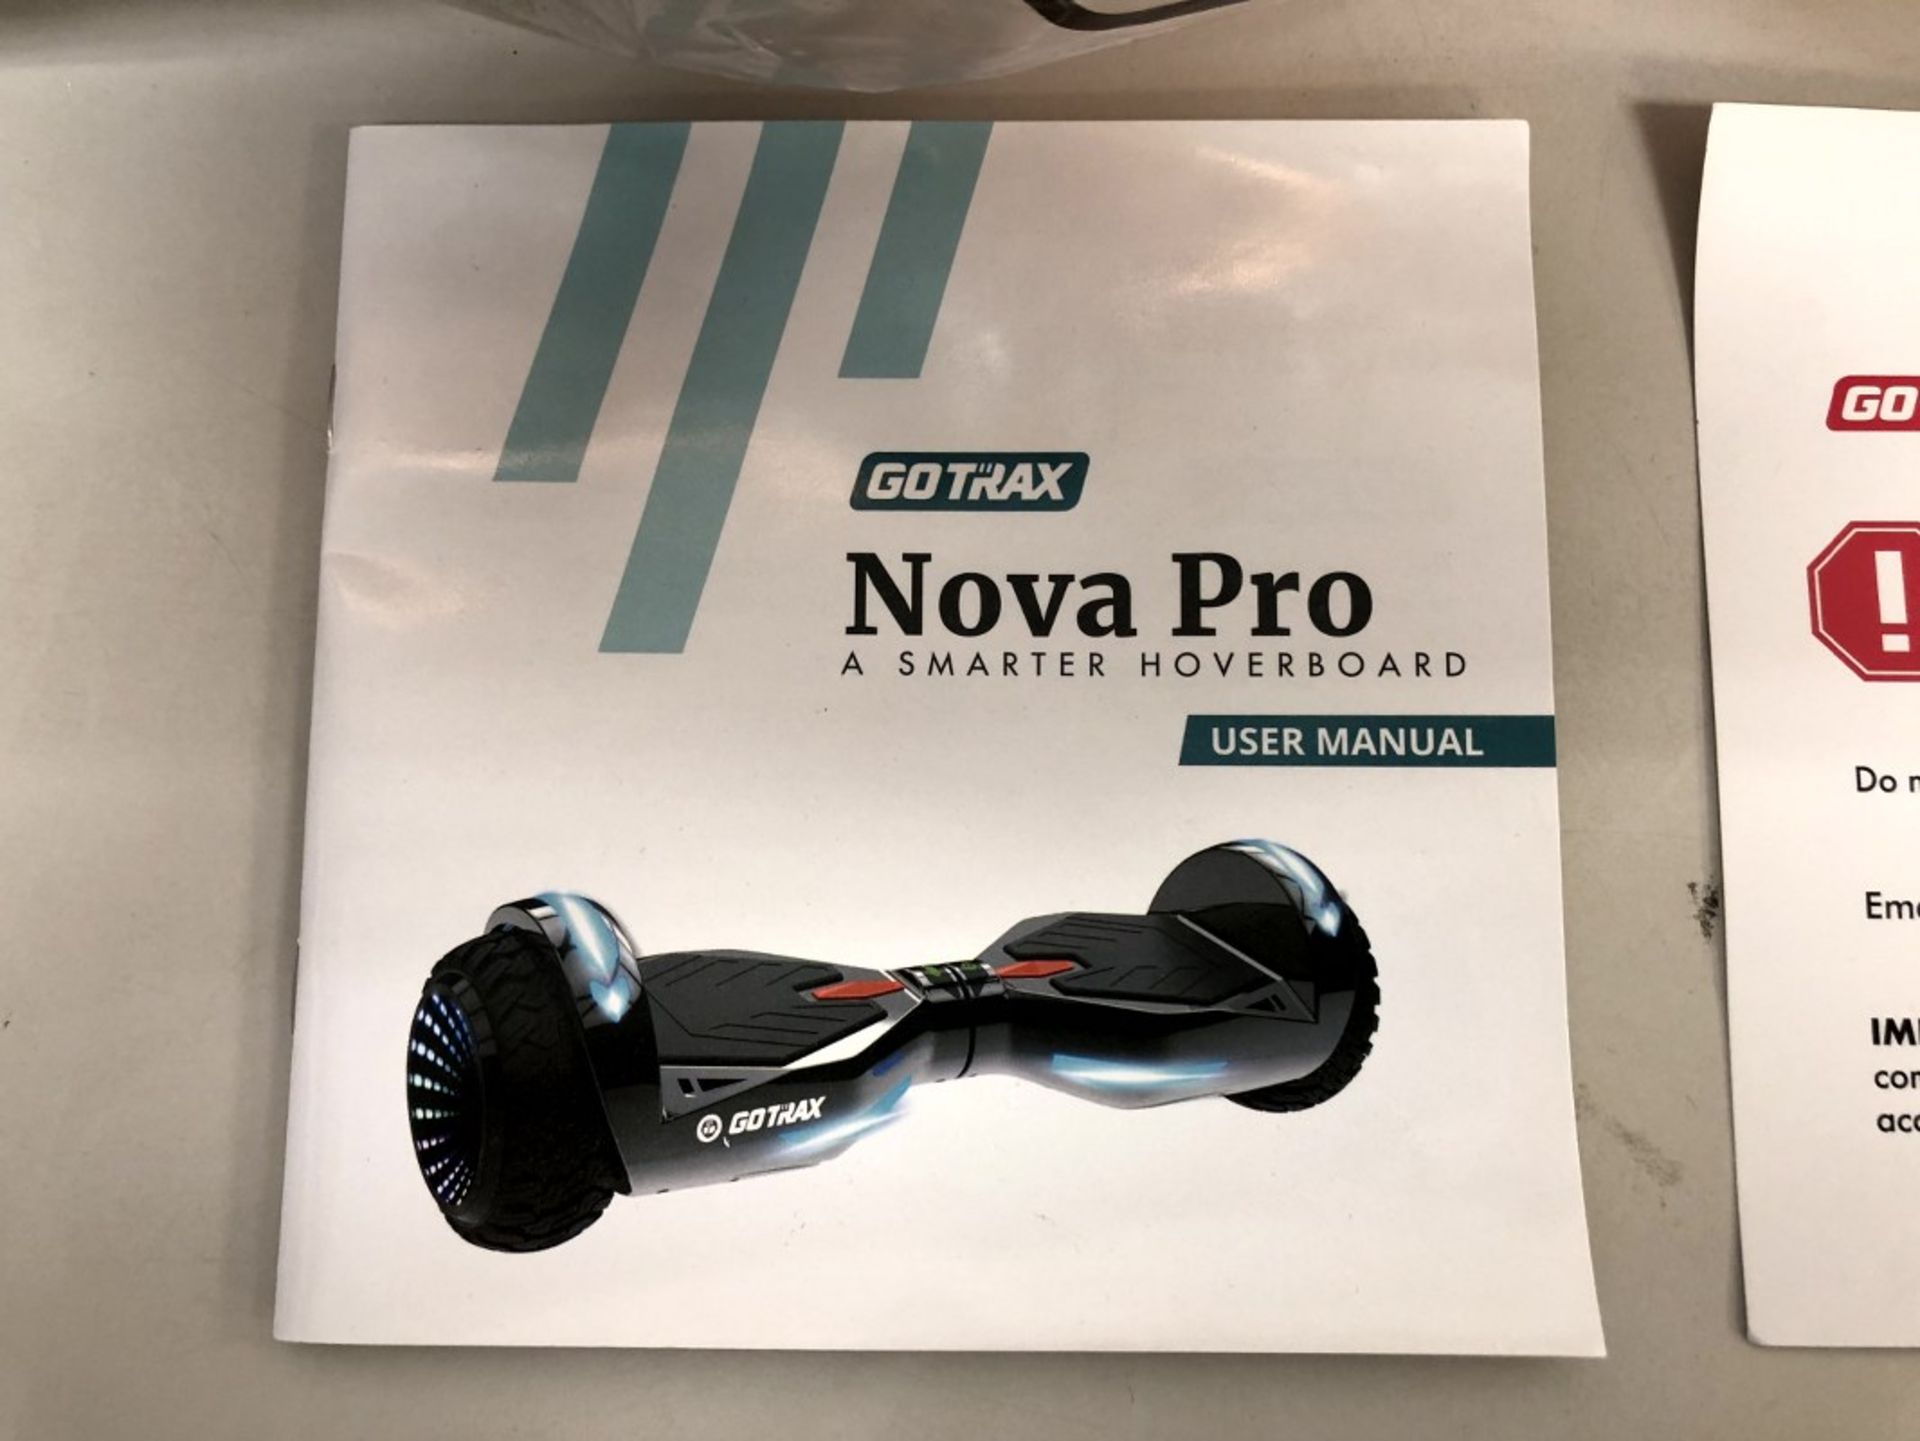 Go Trax - Nova Pro - Smart Hoverboard - Image 2 of 2